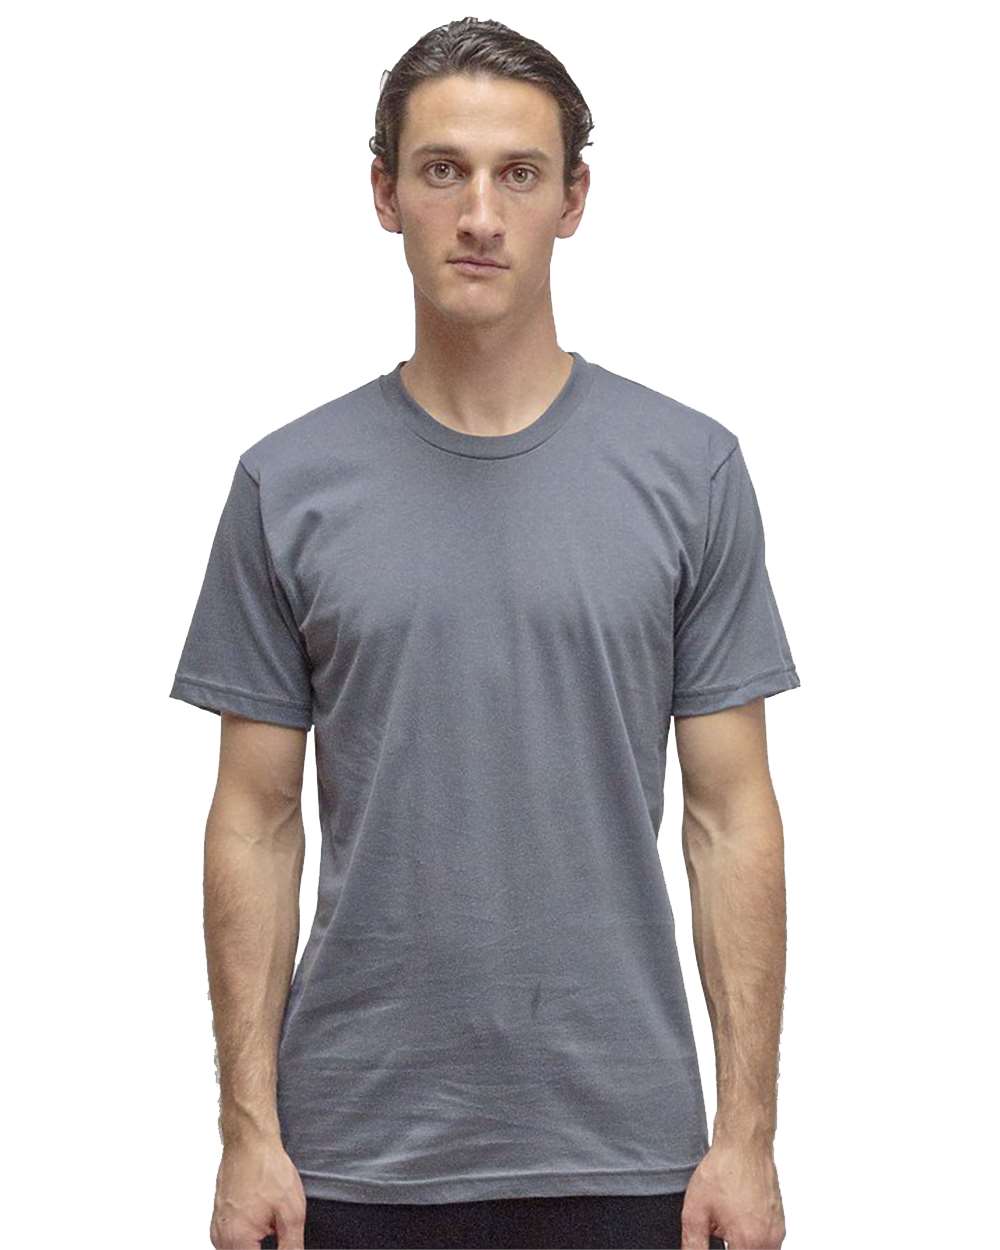 Los Angeles Apparel 20001 USA-Made Fine Jersey T-Shirt